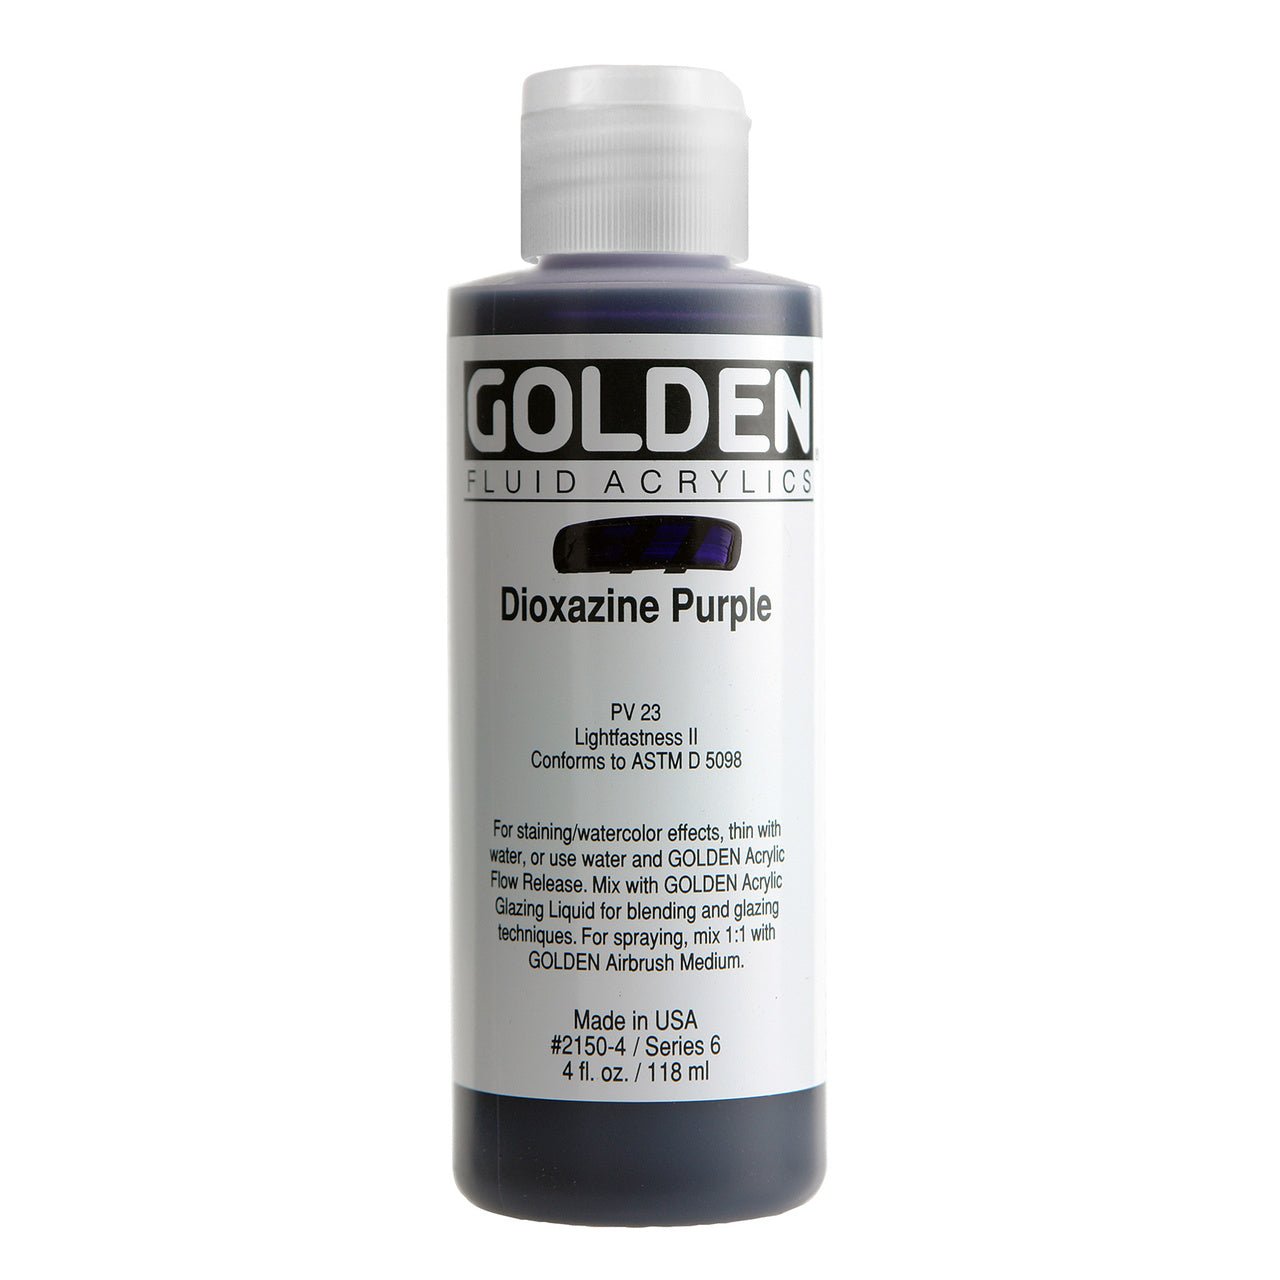 Golden Fluid Acrylic Dioxazine Purple 4 oz - merriartist.com